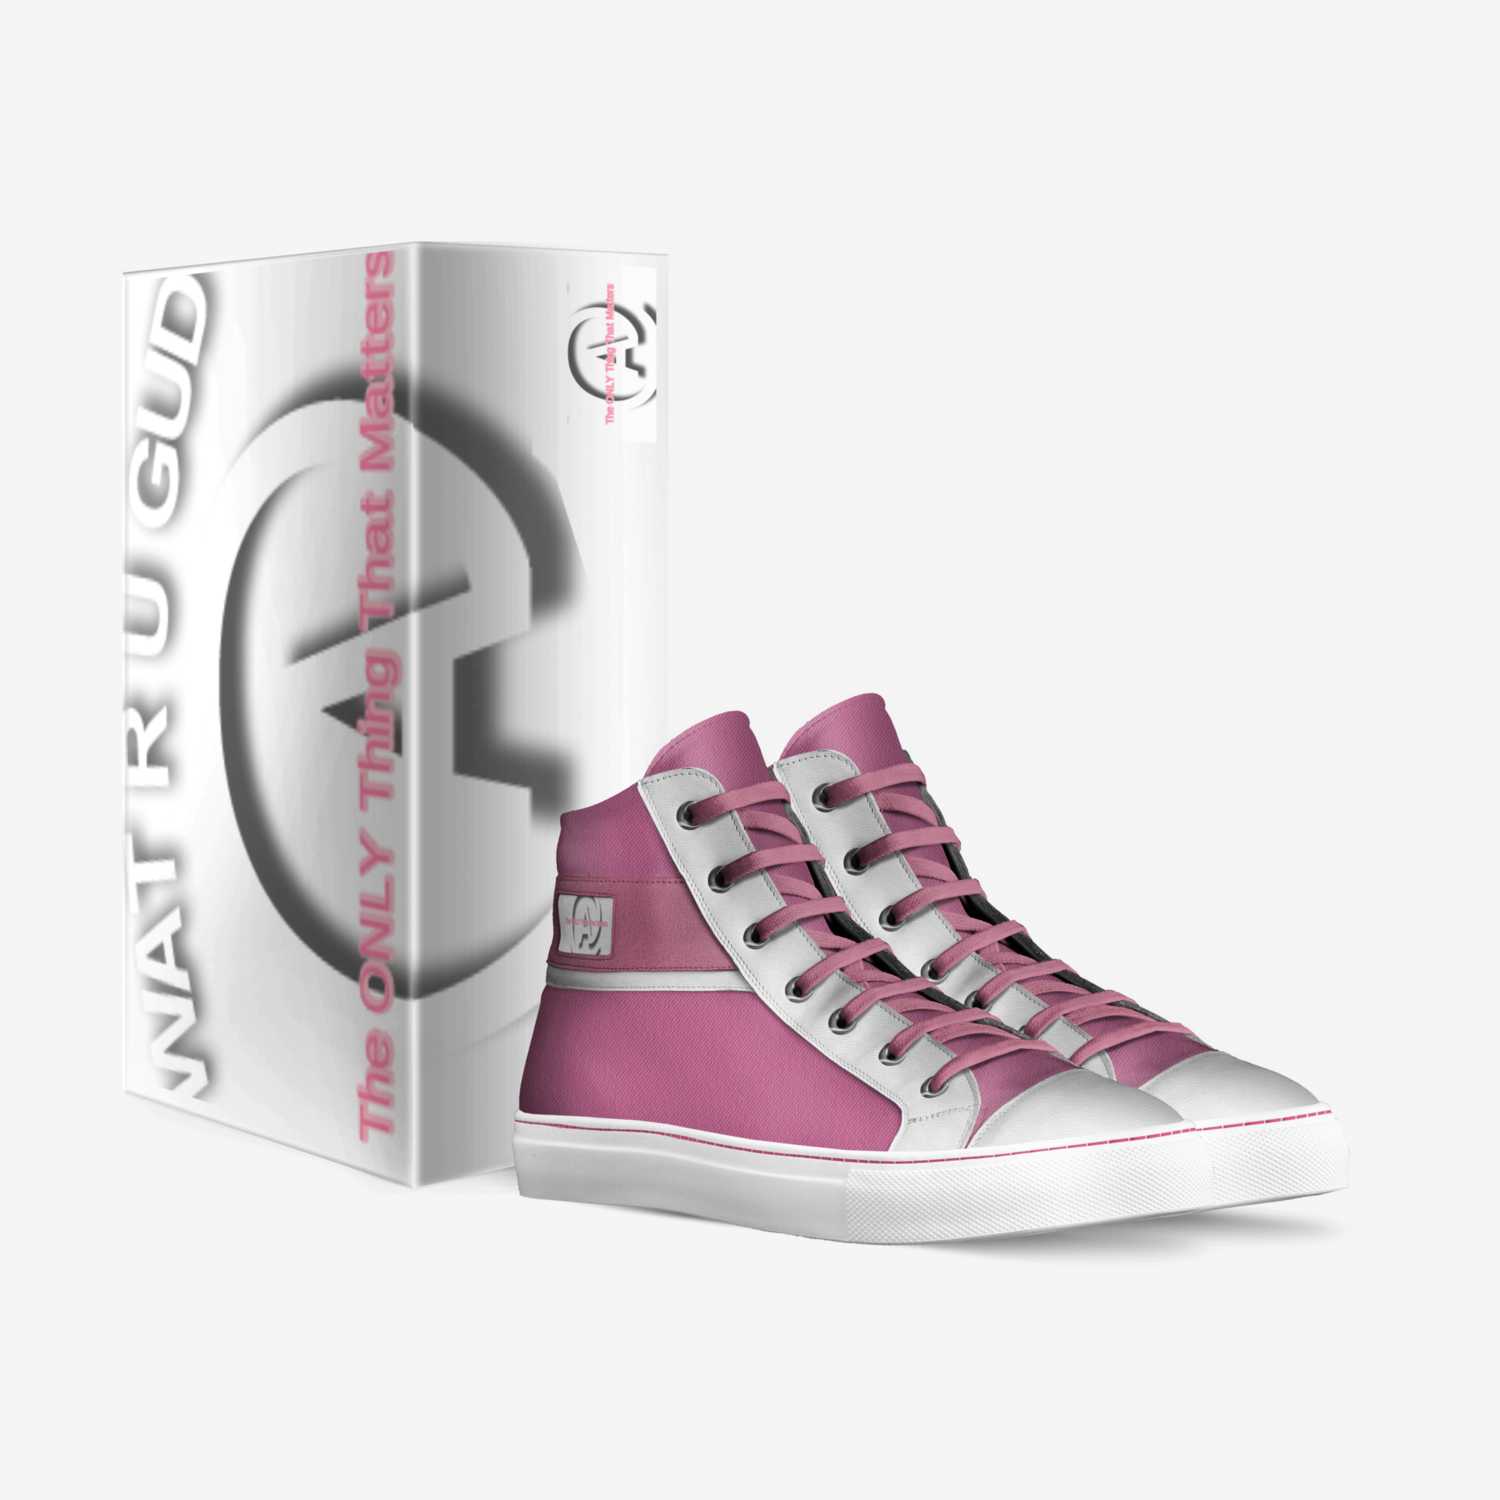 @ethr F*©k C∆π©€® custom made in Italy shoes by Dr. Watrugudat | Box view